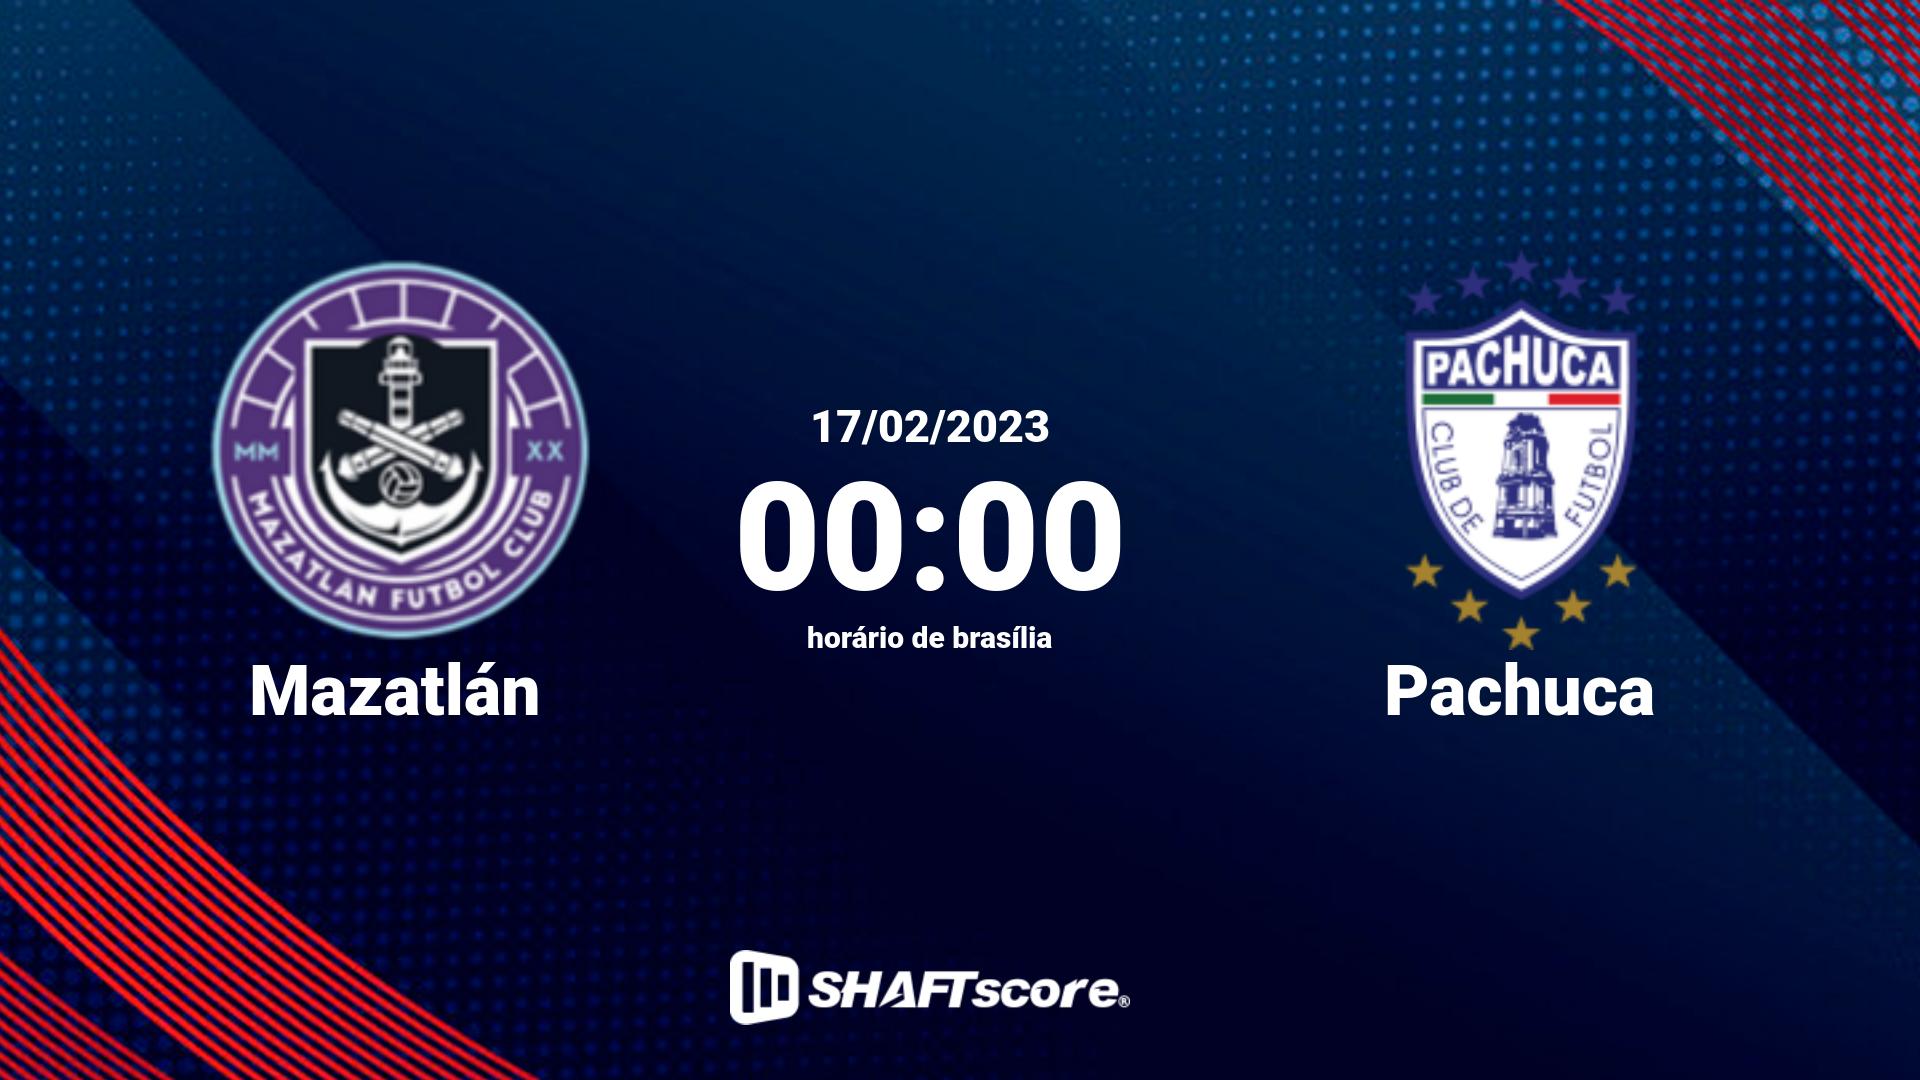 Estatísticas do jogo Mazatlán vs Pachuca 17.02 00:00